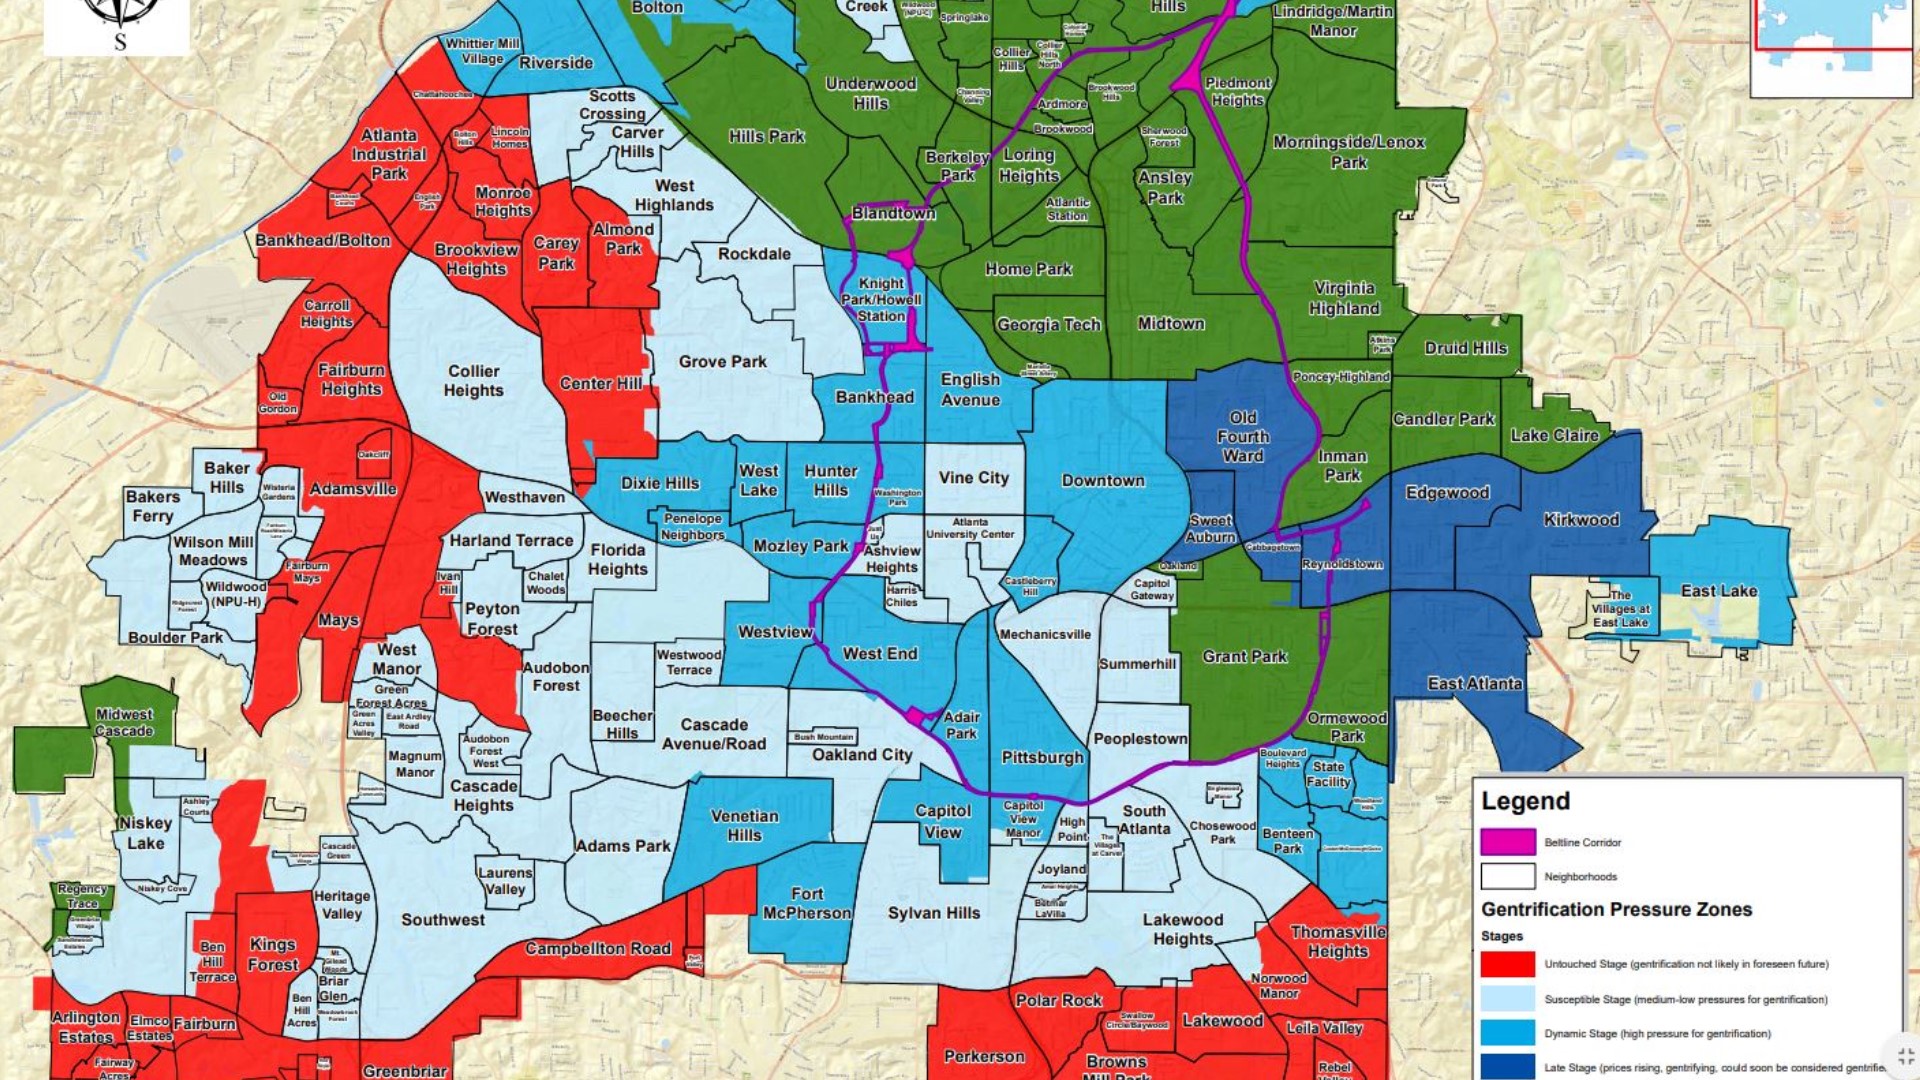 Crime Map Atlanta Ga 